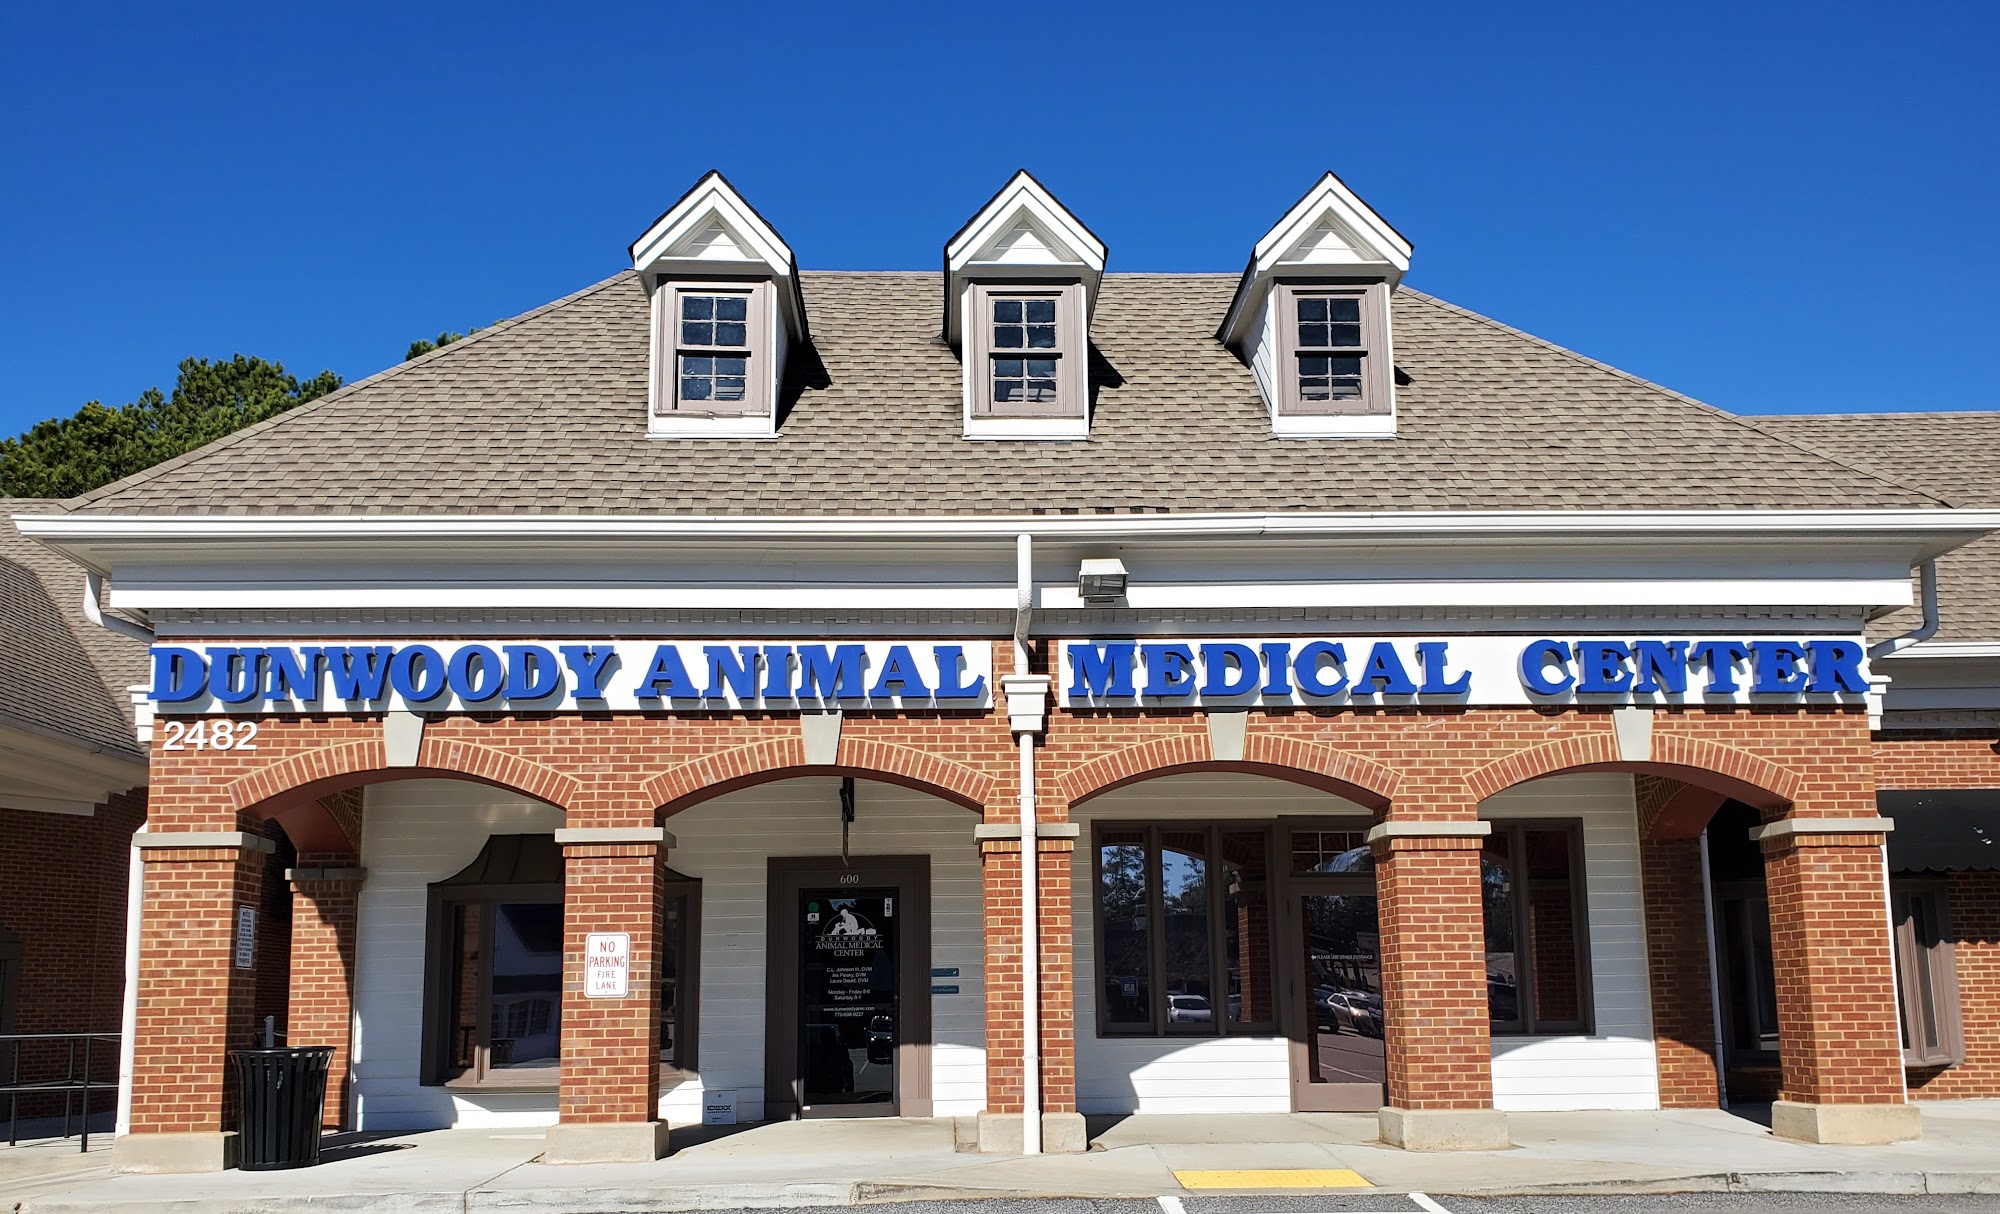 Dunwoody Animal Medical Center